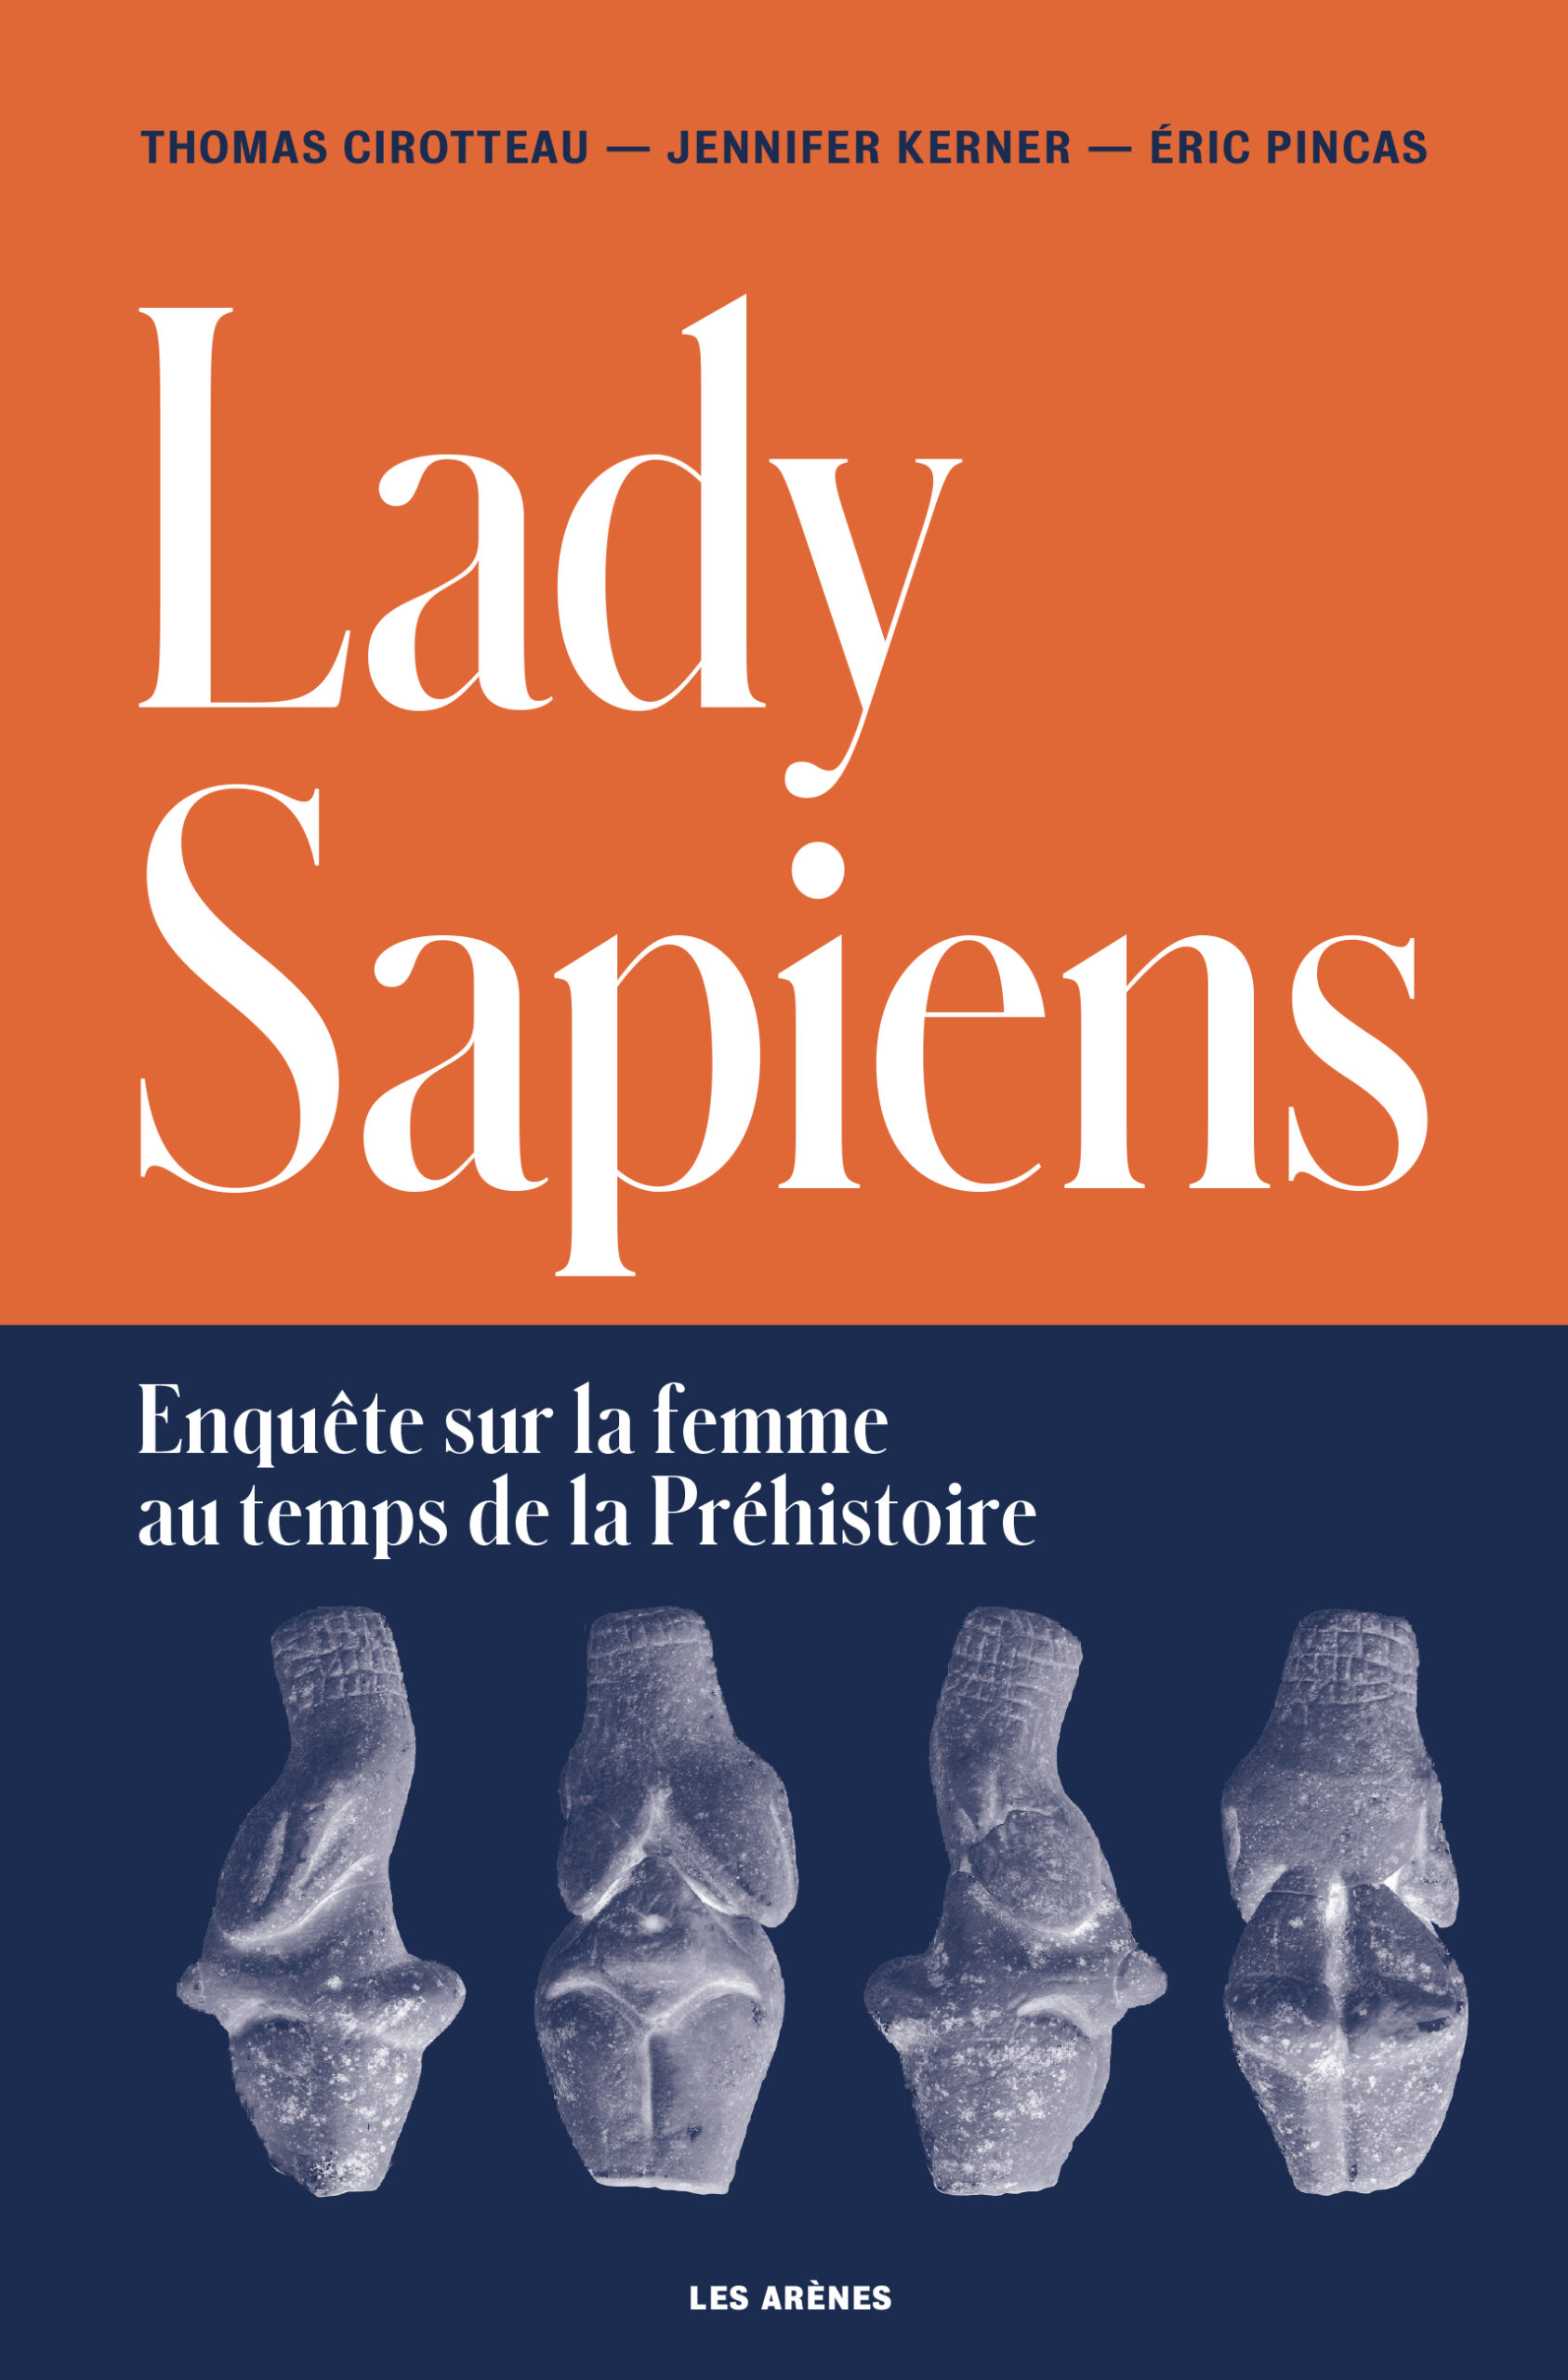 Livre Lady Sapiens